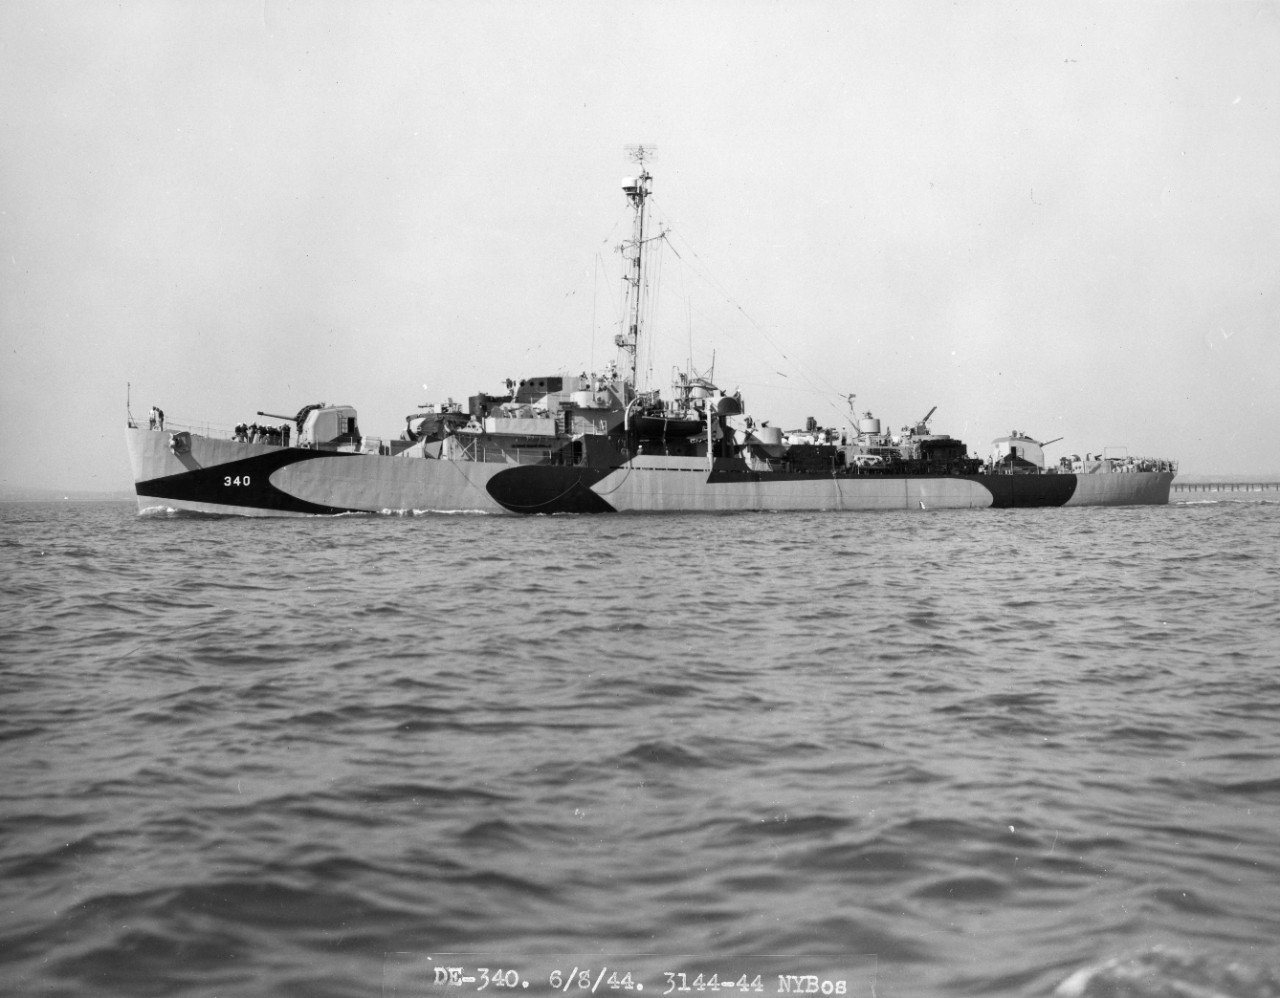 USS O'Flaherty (DE-340) underway, possibly off Boston Navy Yard